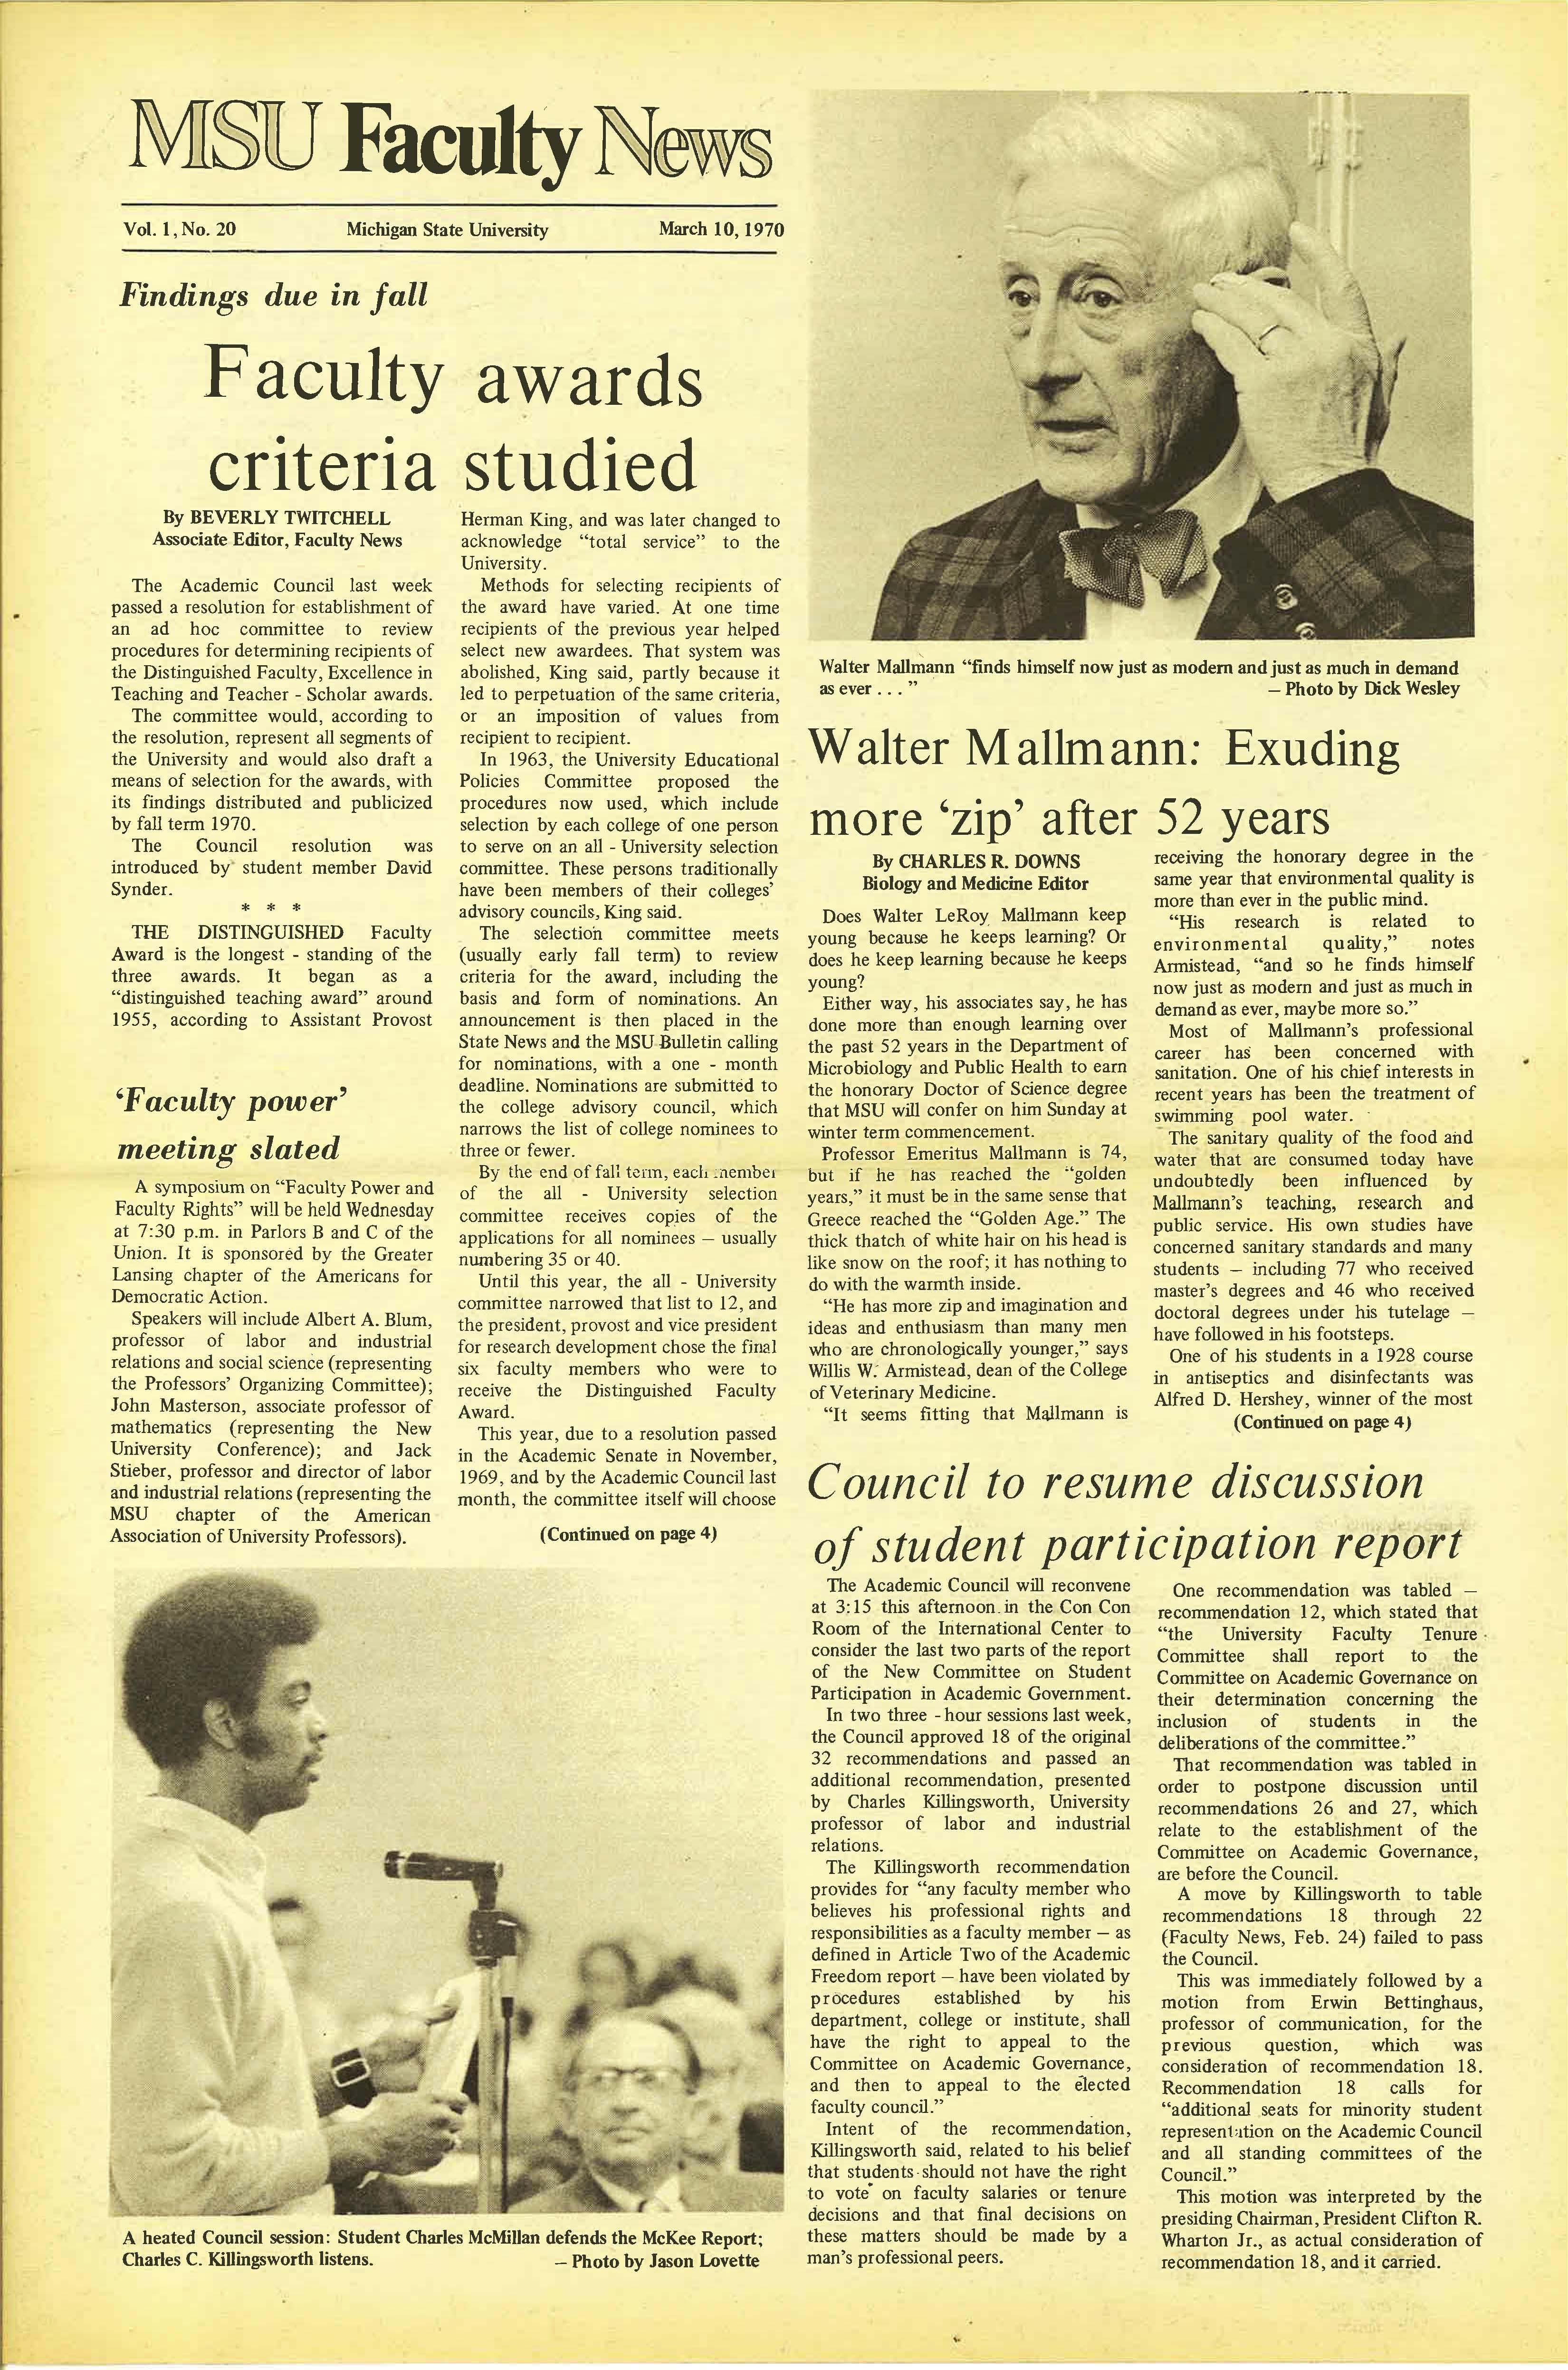 MSU News Bulletin, Vol. 1, No. 18, Feb. 24, 1970